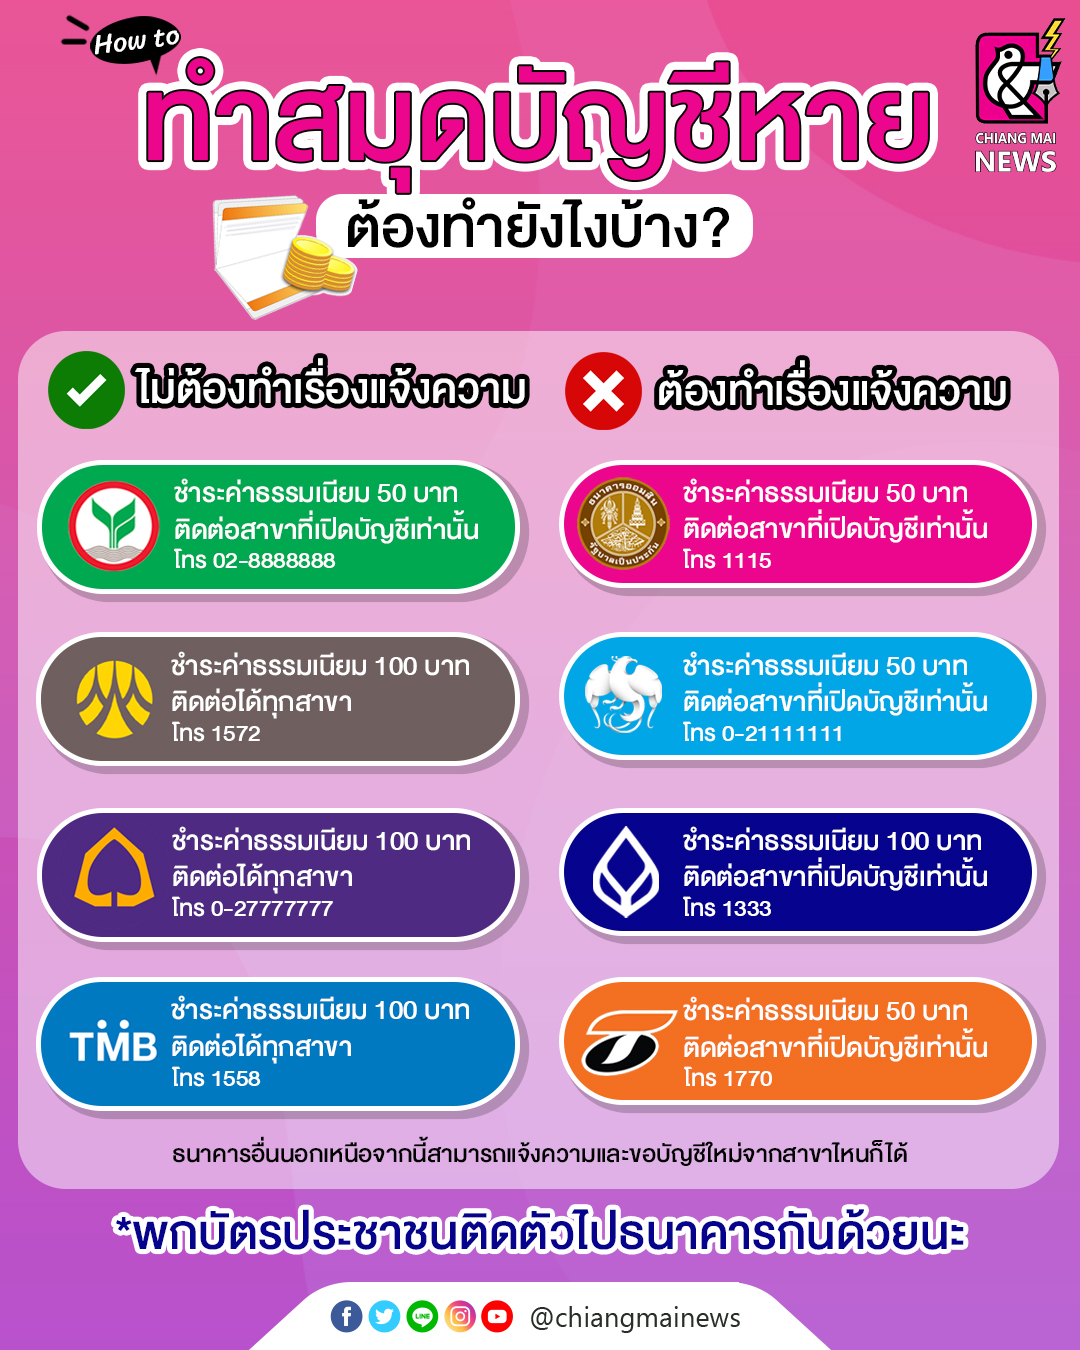 How To) สมุดบัญชีหาย แต่ละธนาคารต้องทำอะไรบ้าง ? - Chiang Mai News